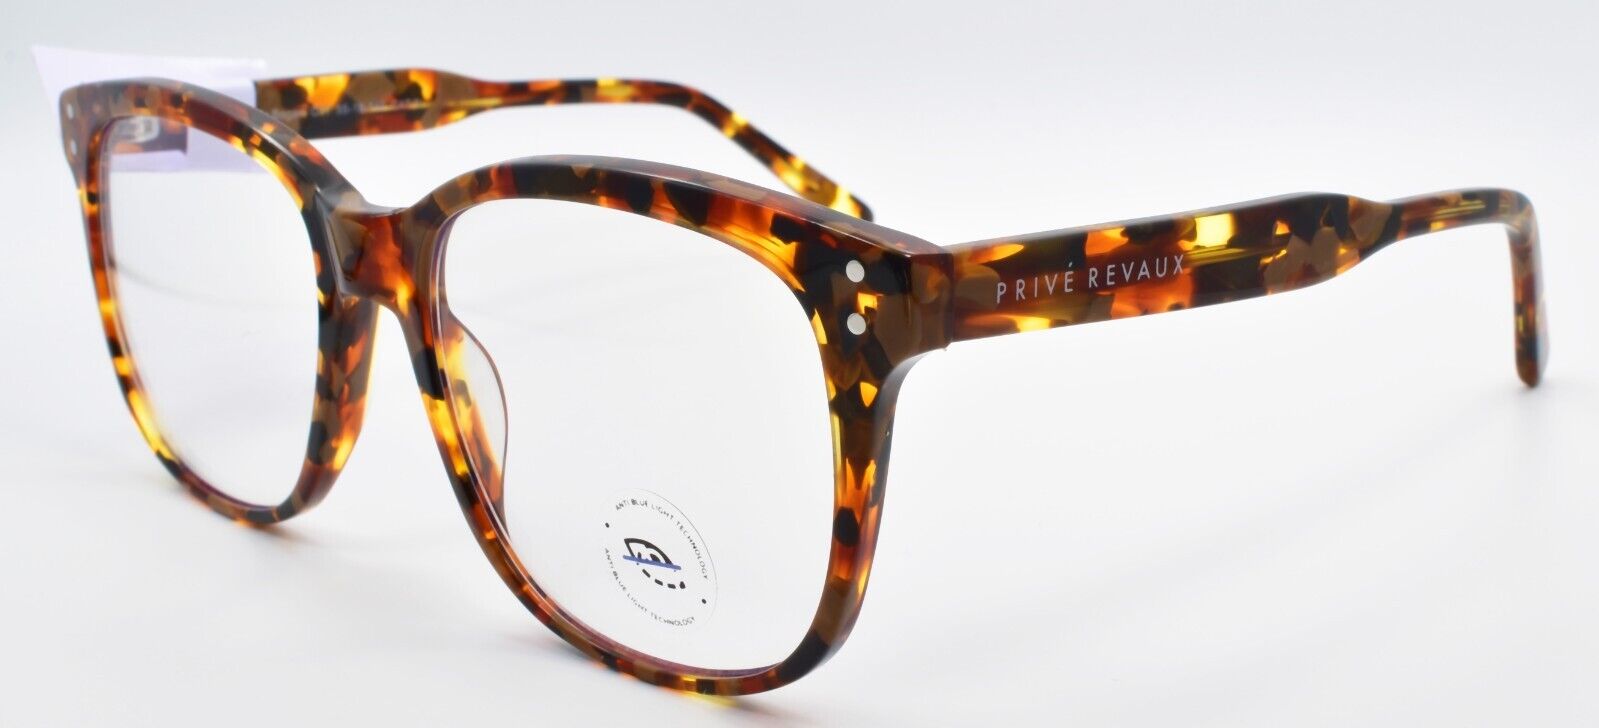 1-Prive Revaux The Bogart Eyeglasses Frames Blue Light Blocking RX-ready Brown-810047319375-IKSpecs